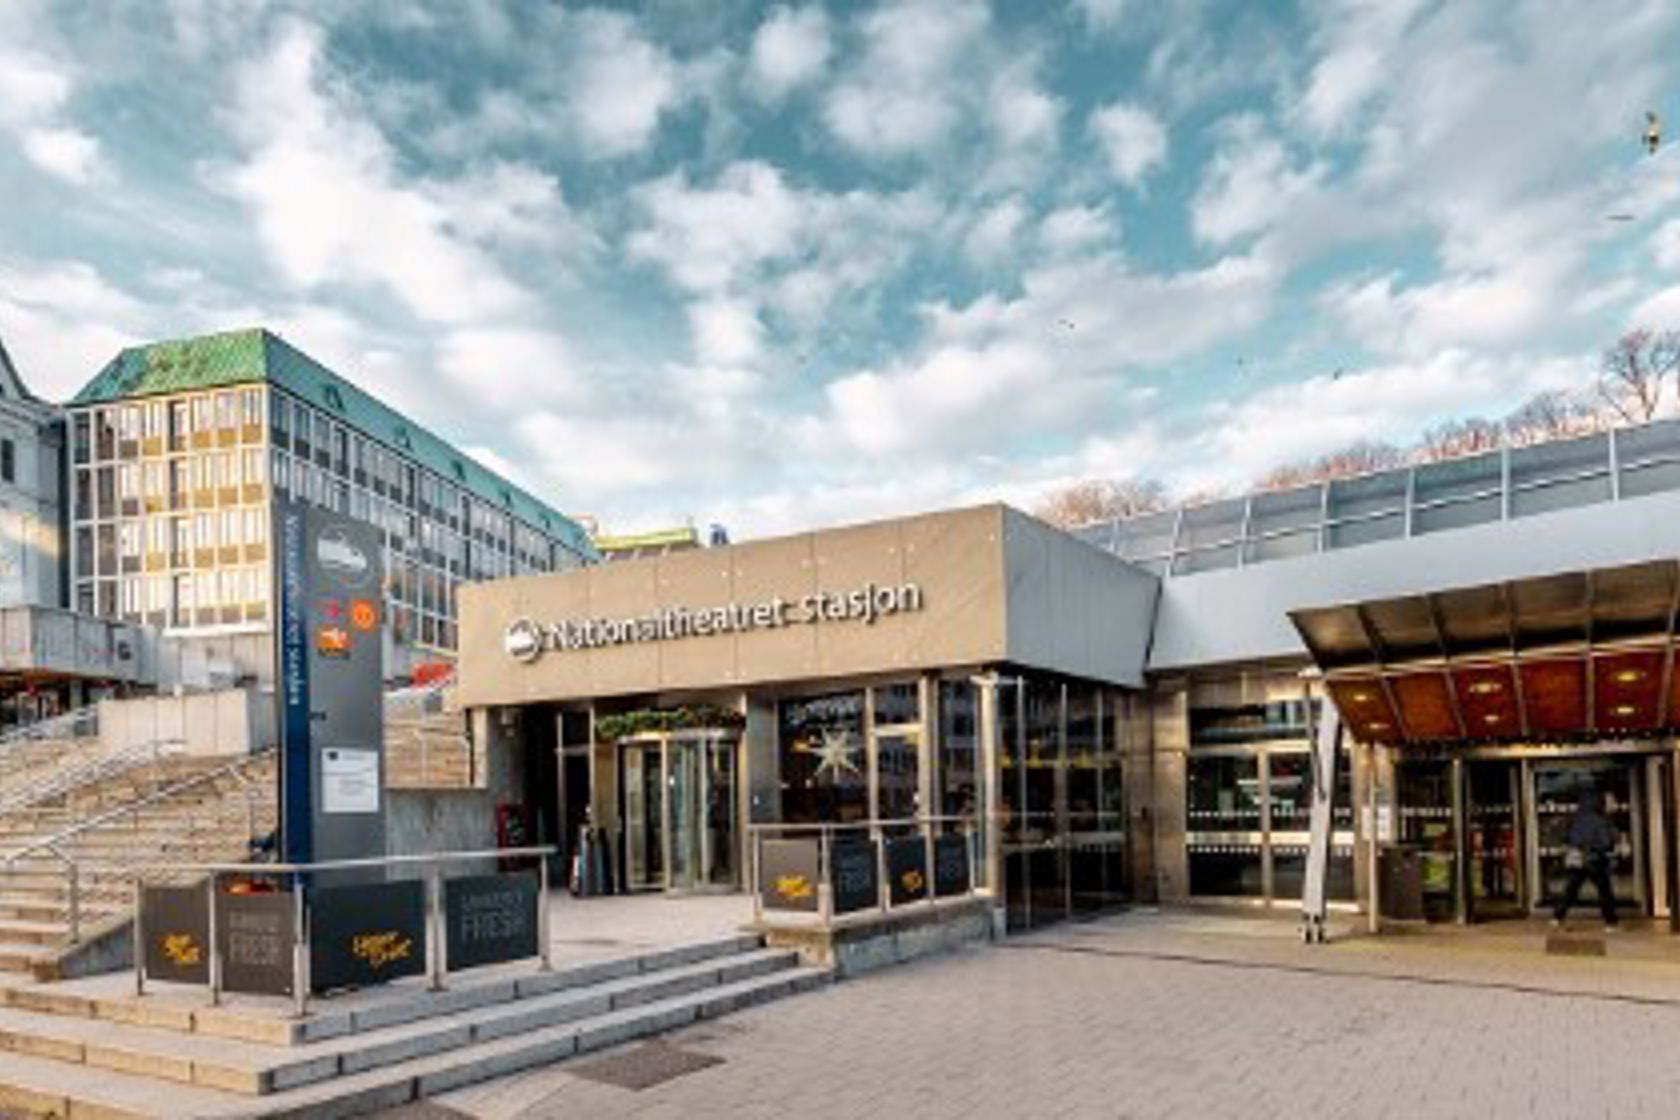 Exterior photo of Nationaltheateret station entrance from Ruseløkkveien